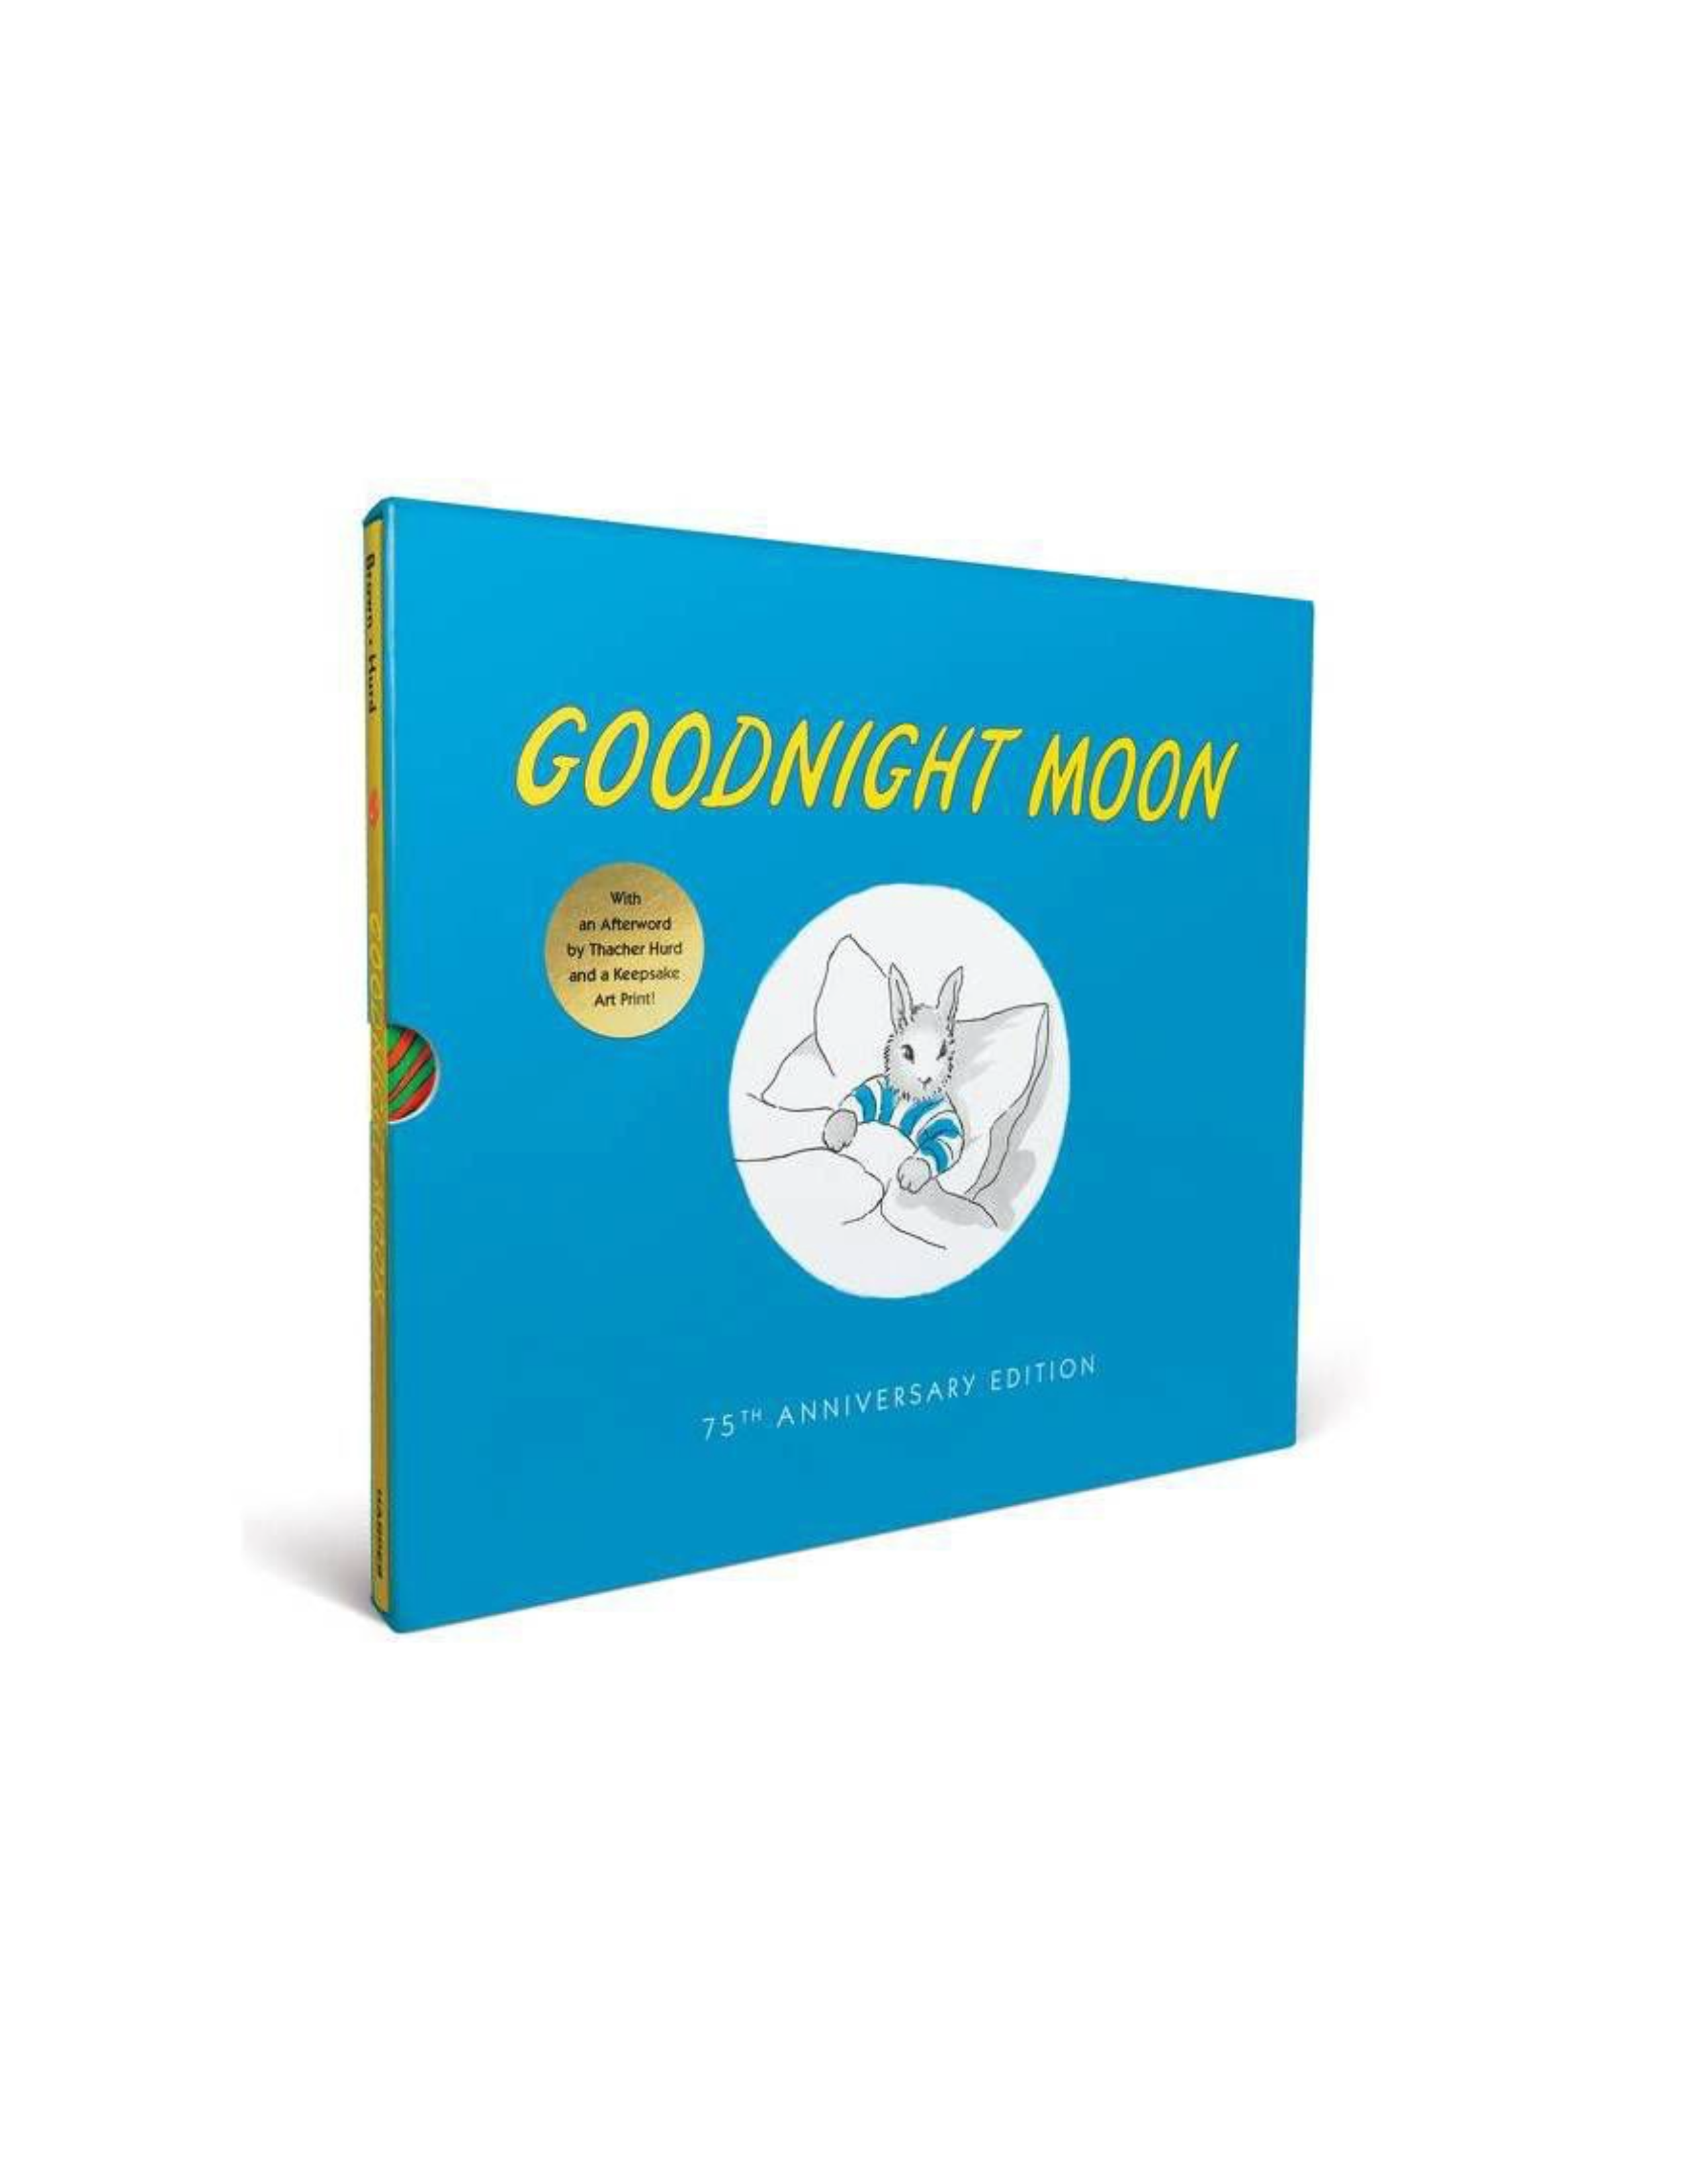 Goodnight Moon 75th Anniversary Edition